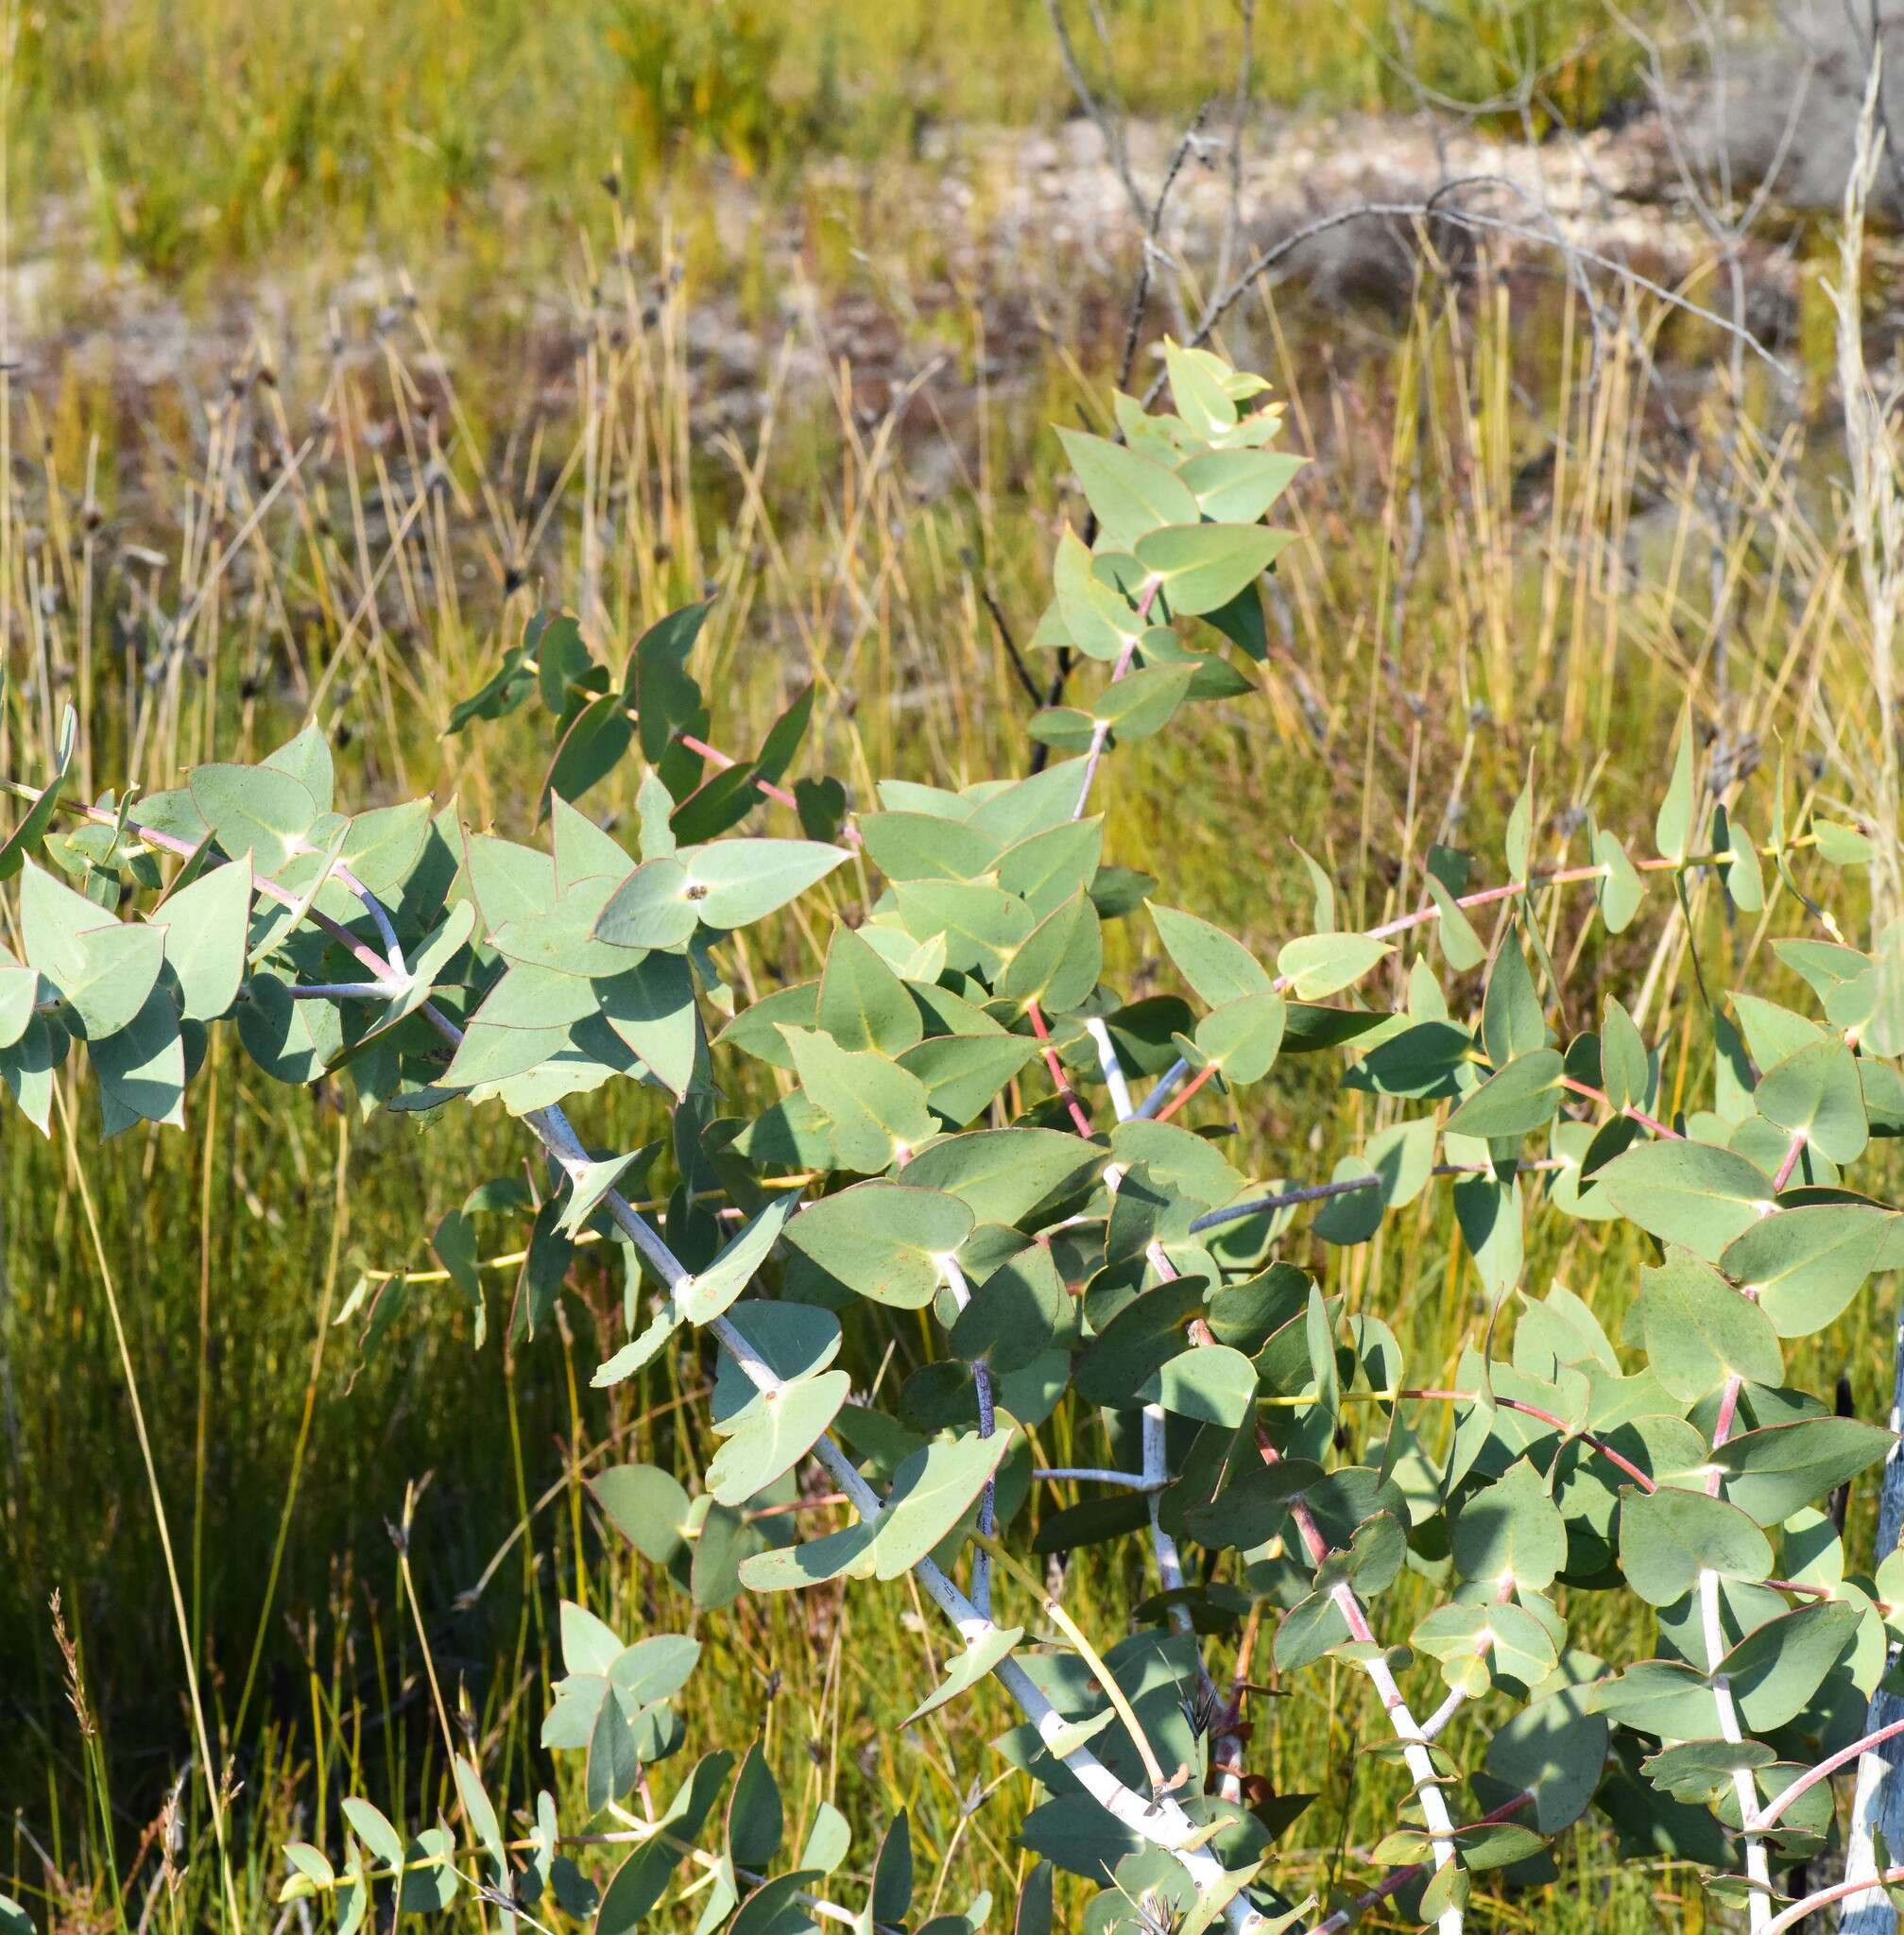 Image of Eucalyptus sturgissiana L. A. S. Johnson & Blaxell